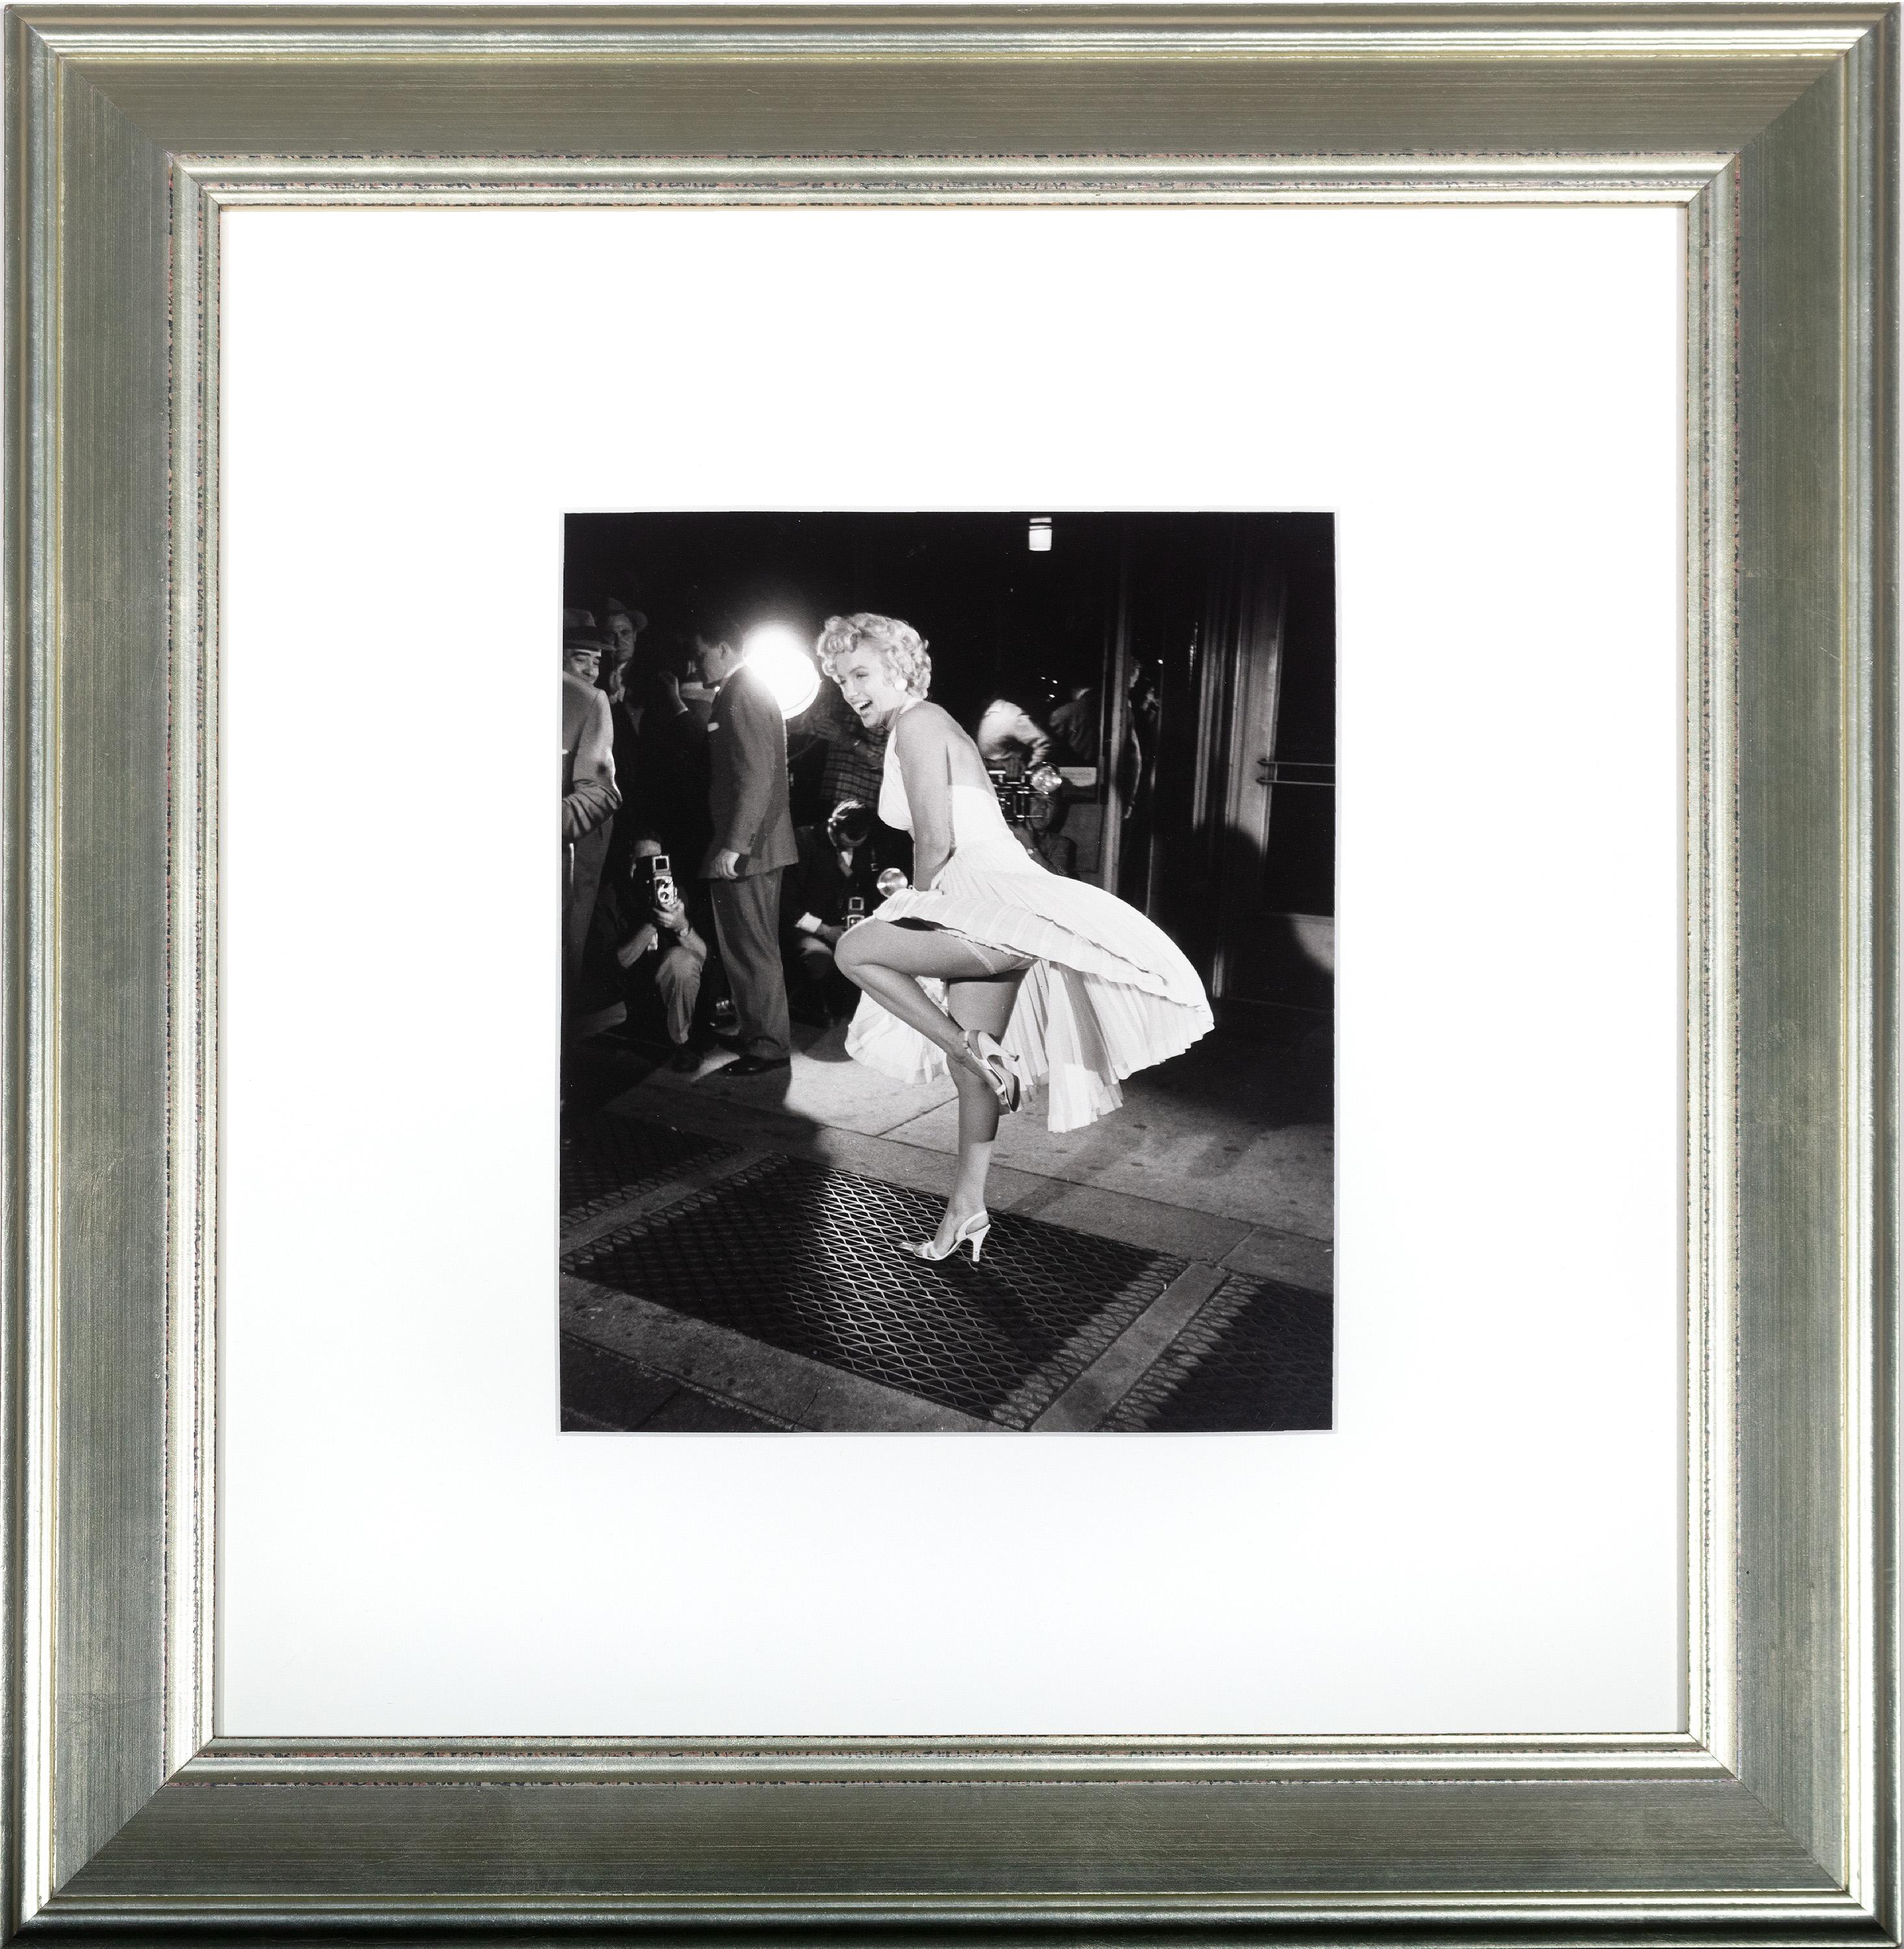 George Zimbel Figurative Photograph – Marylin Monroe Schwarz-Weiß-Fotografie weiblicher Ikonischer Pop Americana, signiert